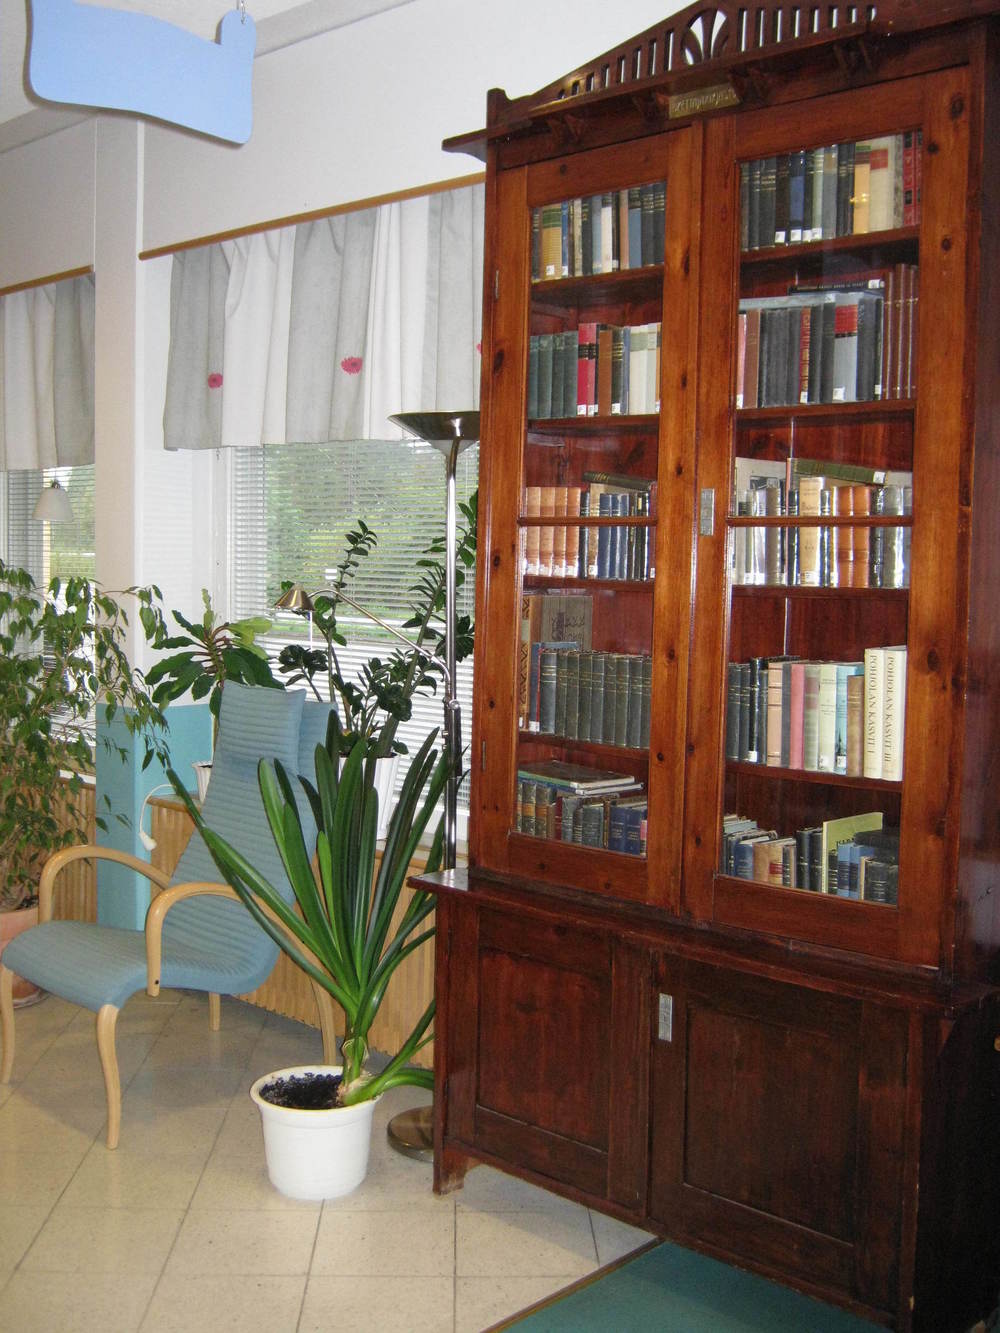 Simo library